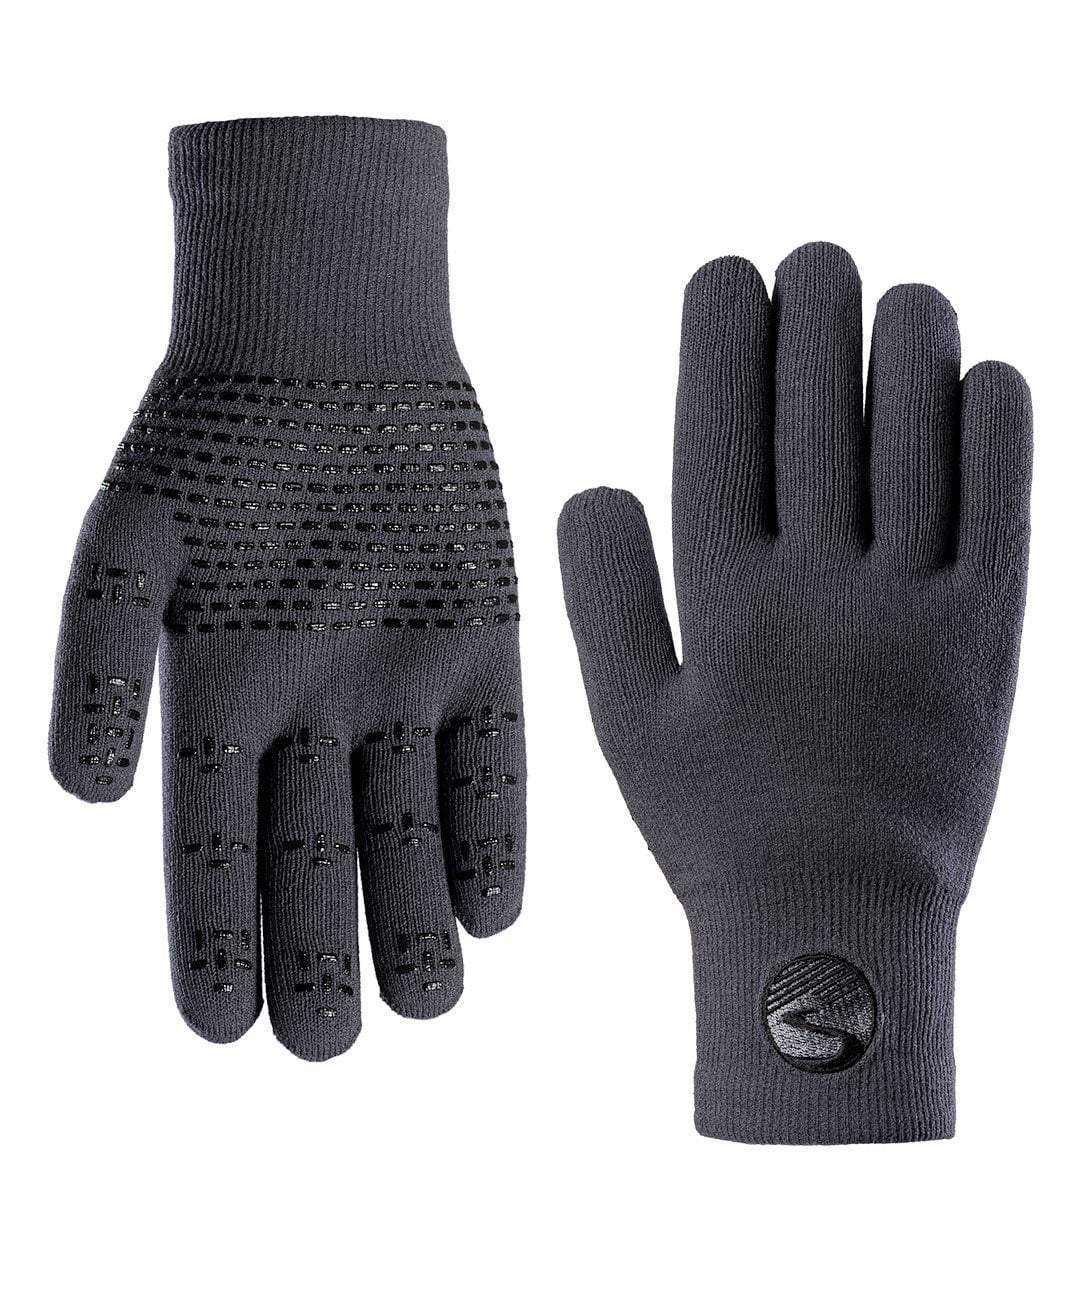 Knit Waterproof Pass Gloves Showers Fall | Crosspoint